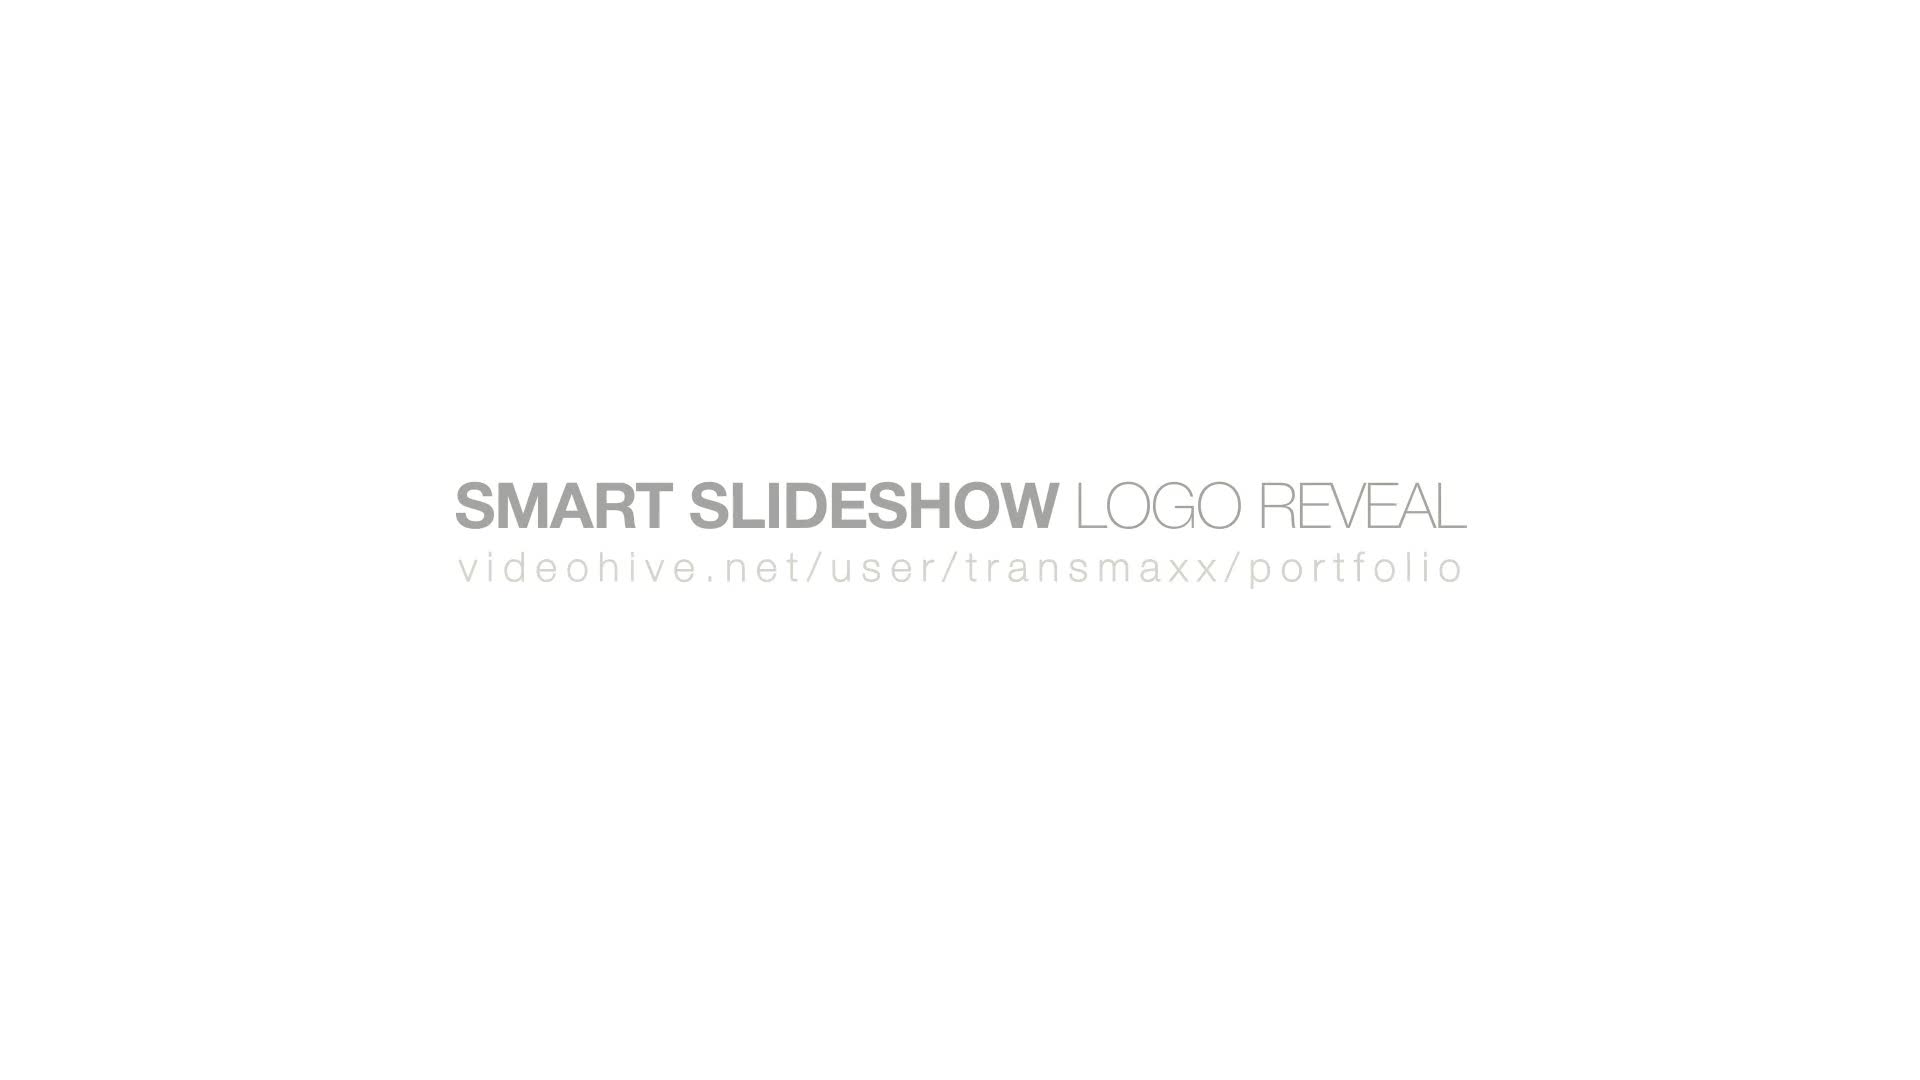 Universal Smart Slideshow Logo Reveal Videohive 29169622 Premiere Pro Image 1